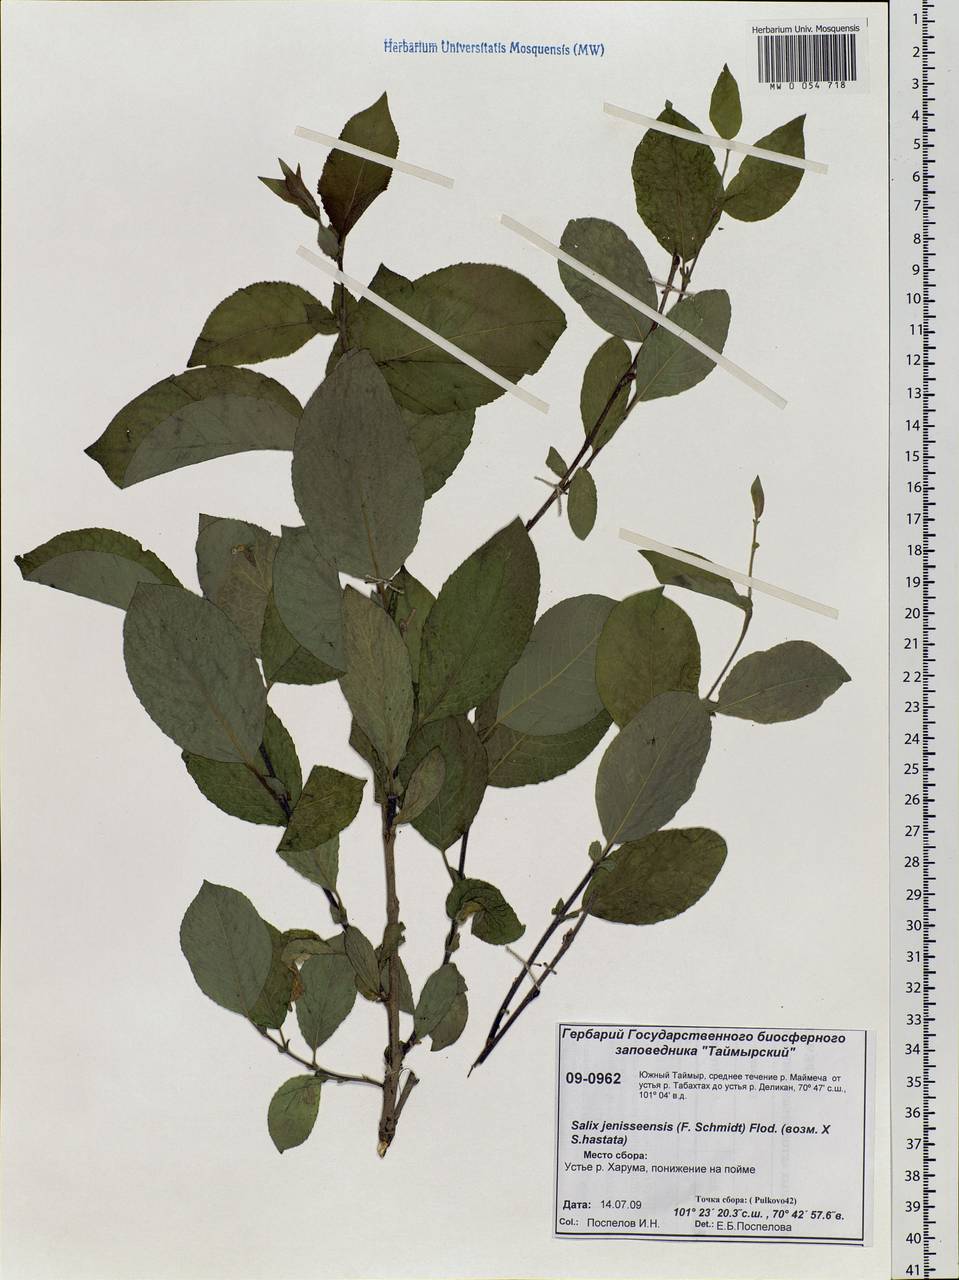 Salix jenisseensis (F. Schmidt) Flod., Siberia, Central Siberia (S3) (Russia)